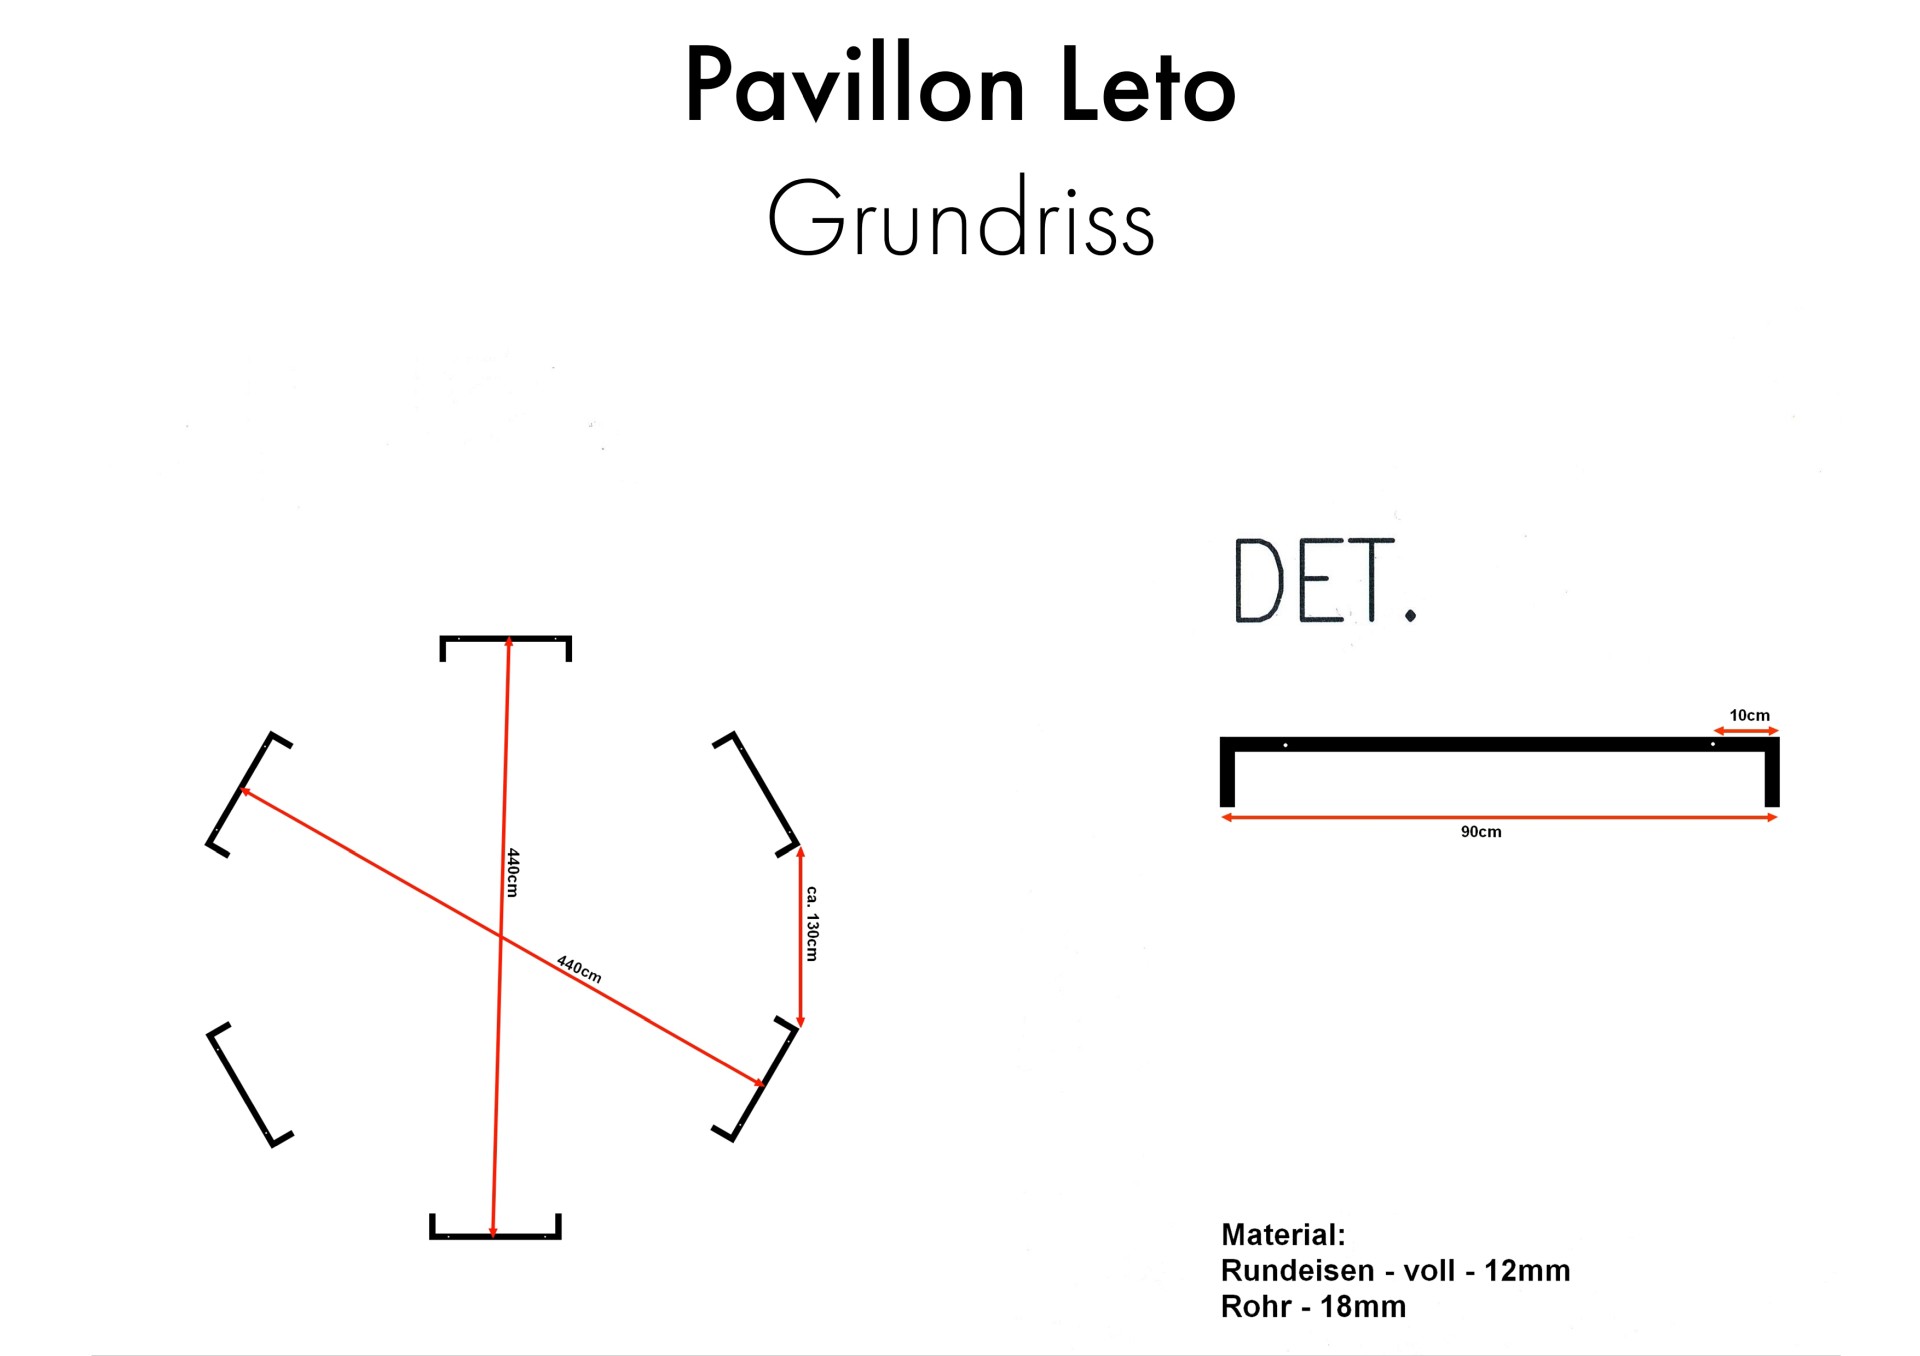 Pavillon Leto